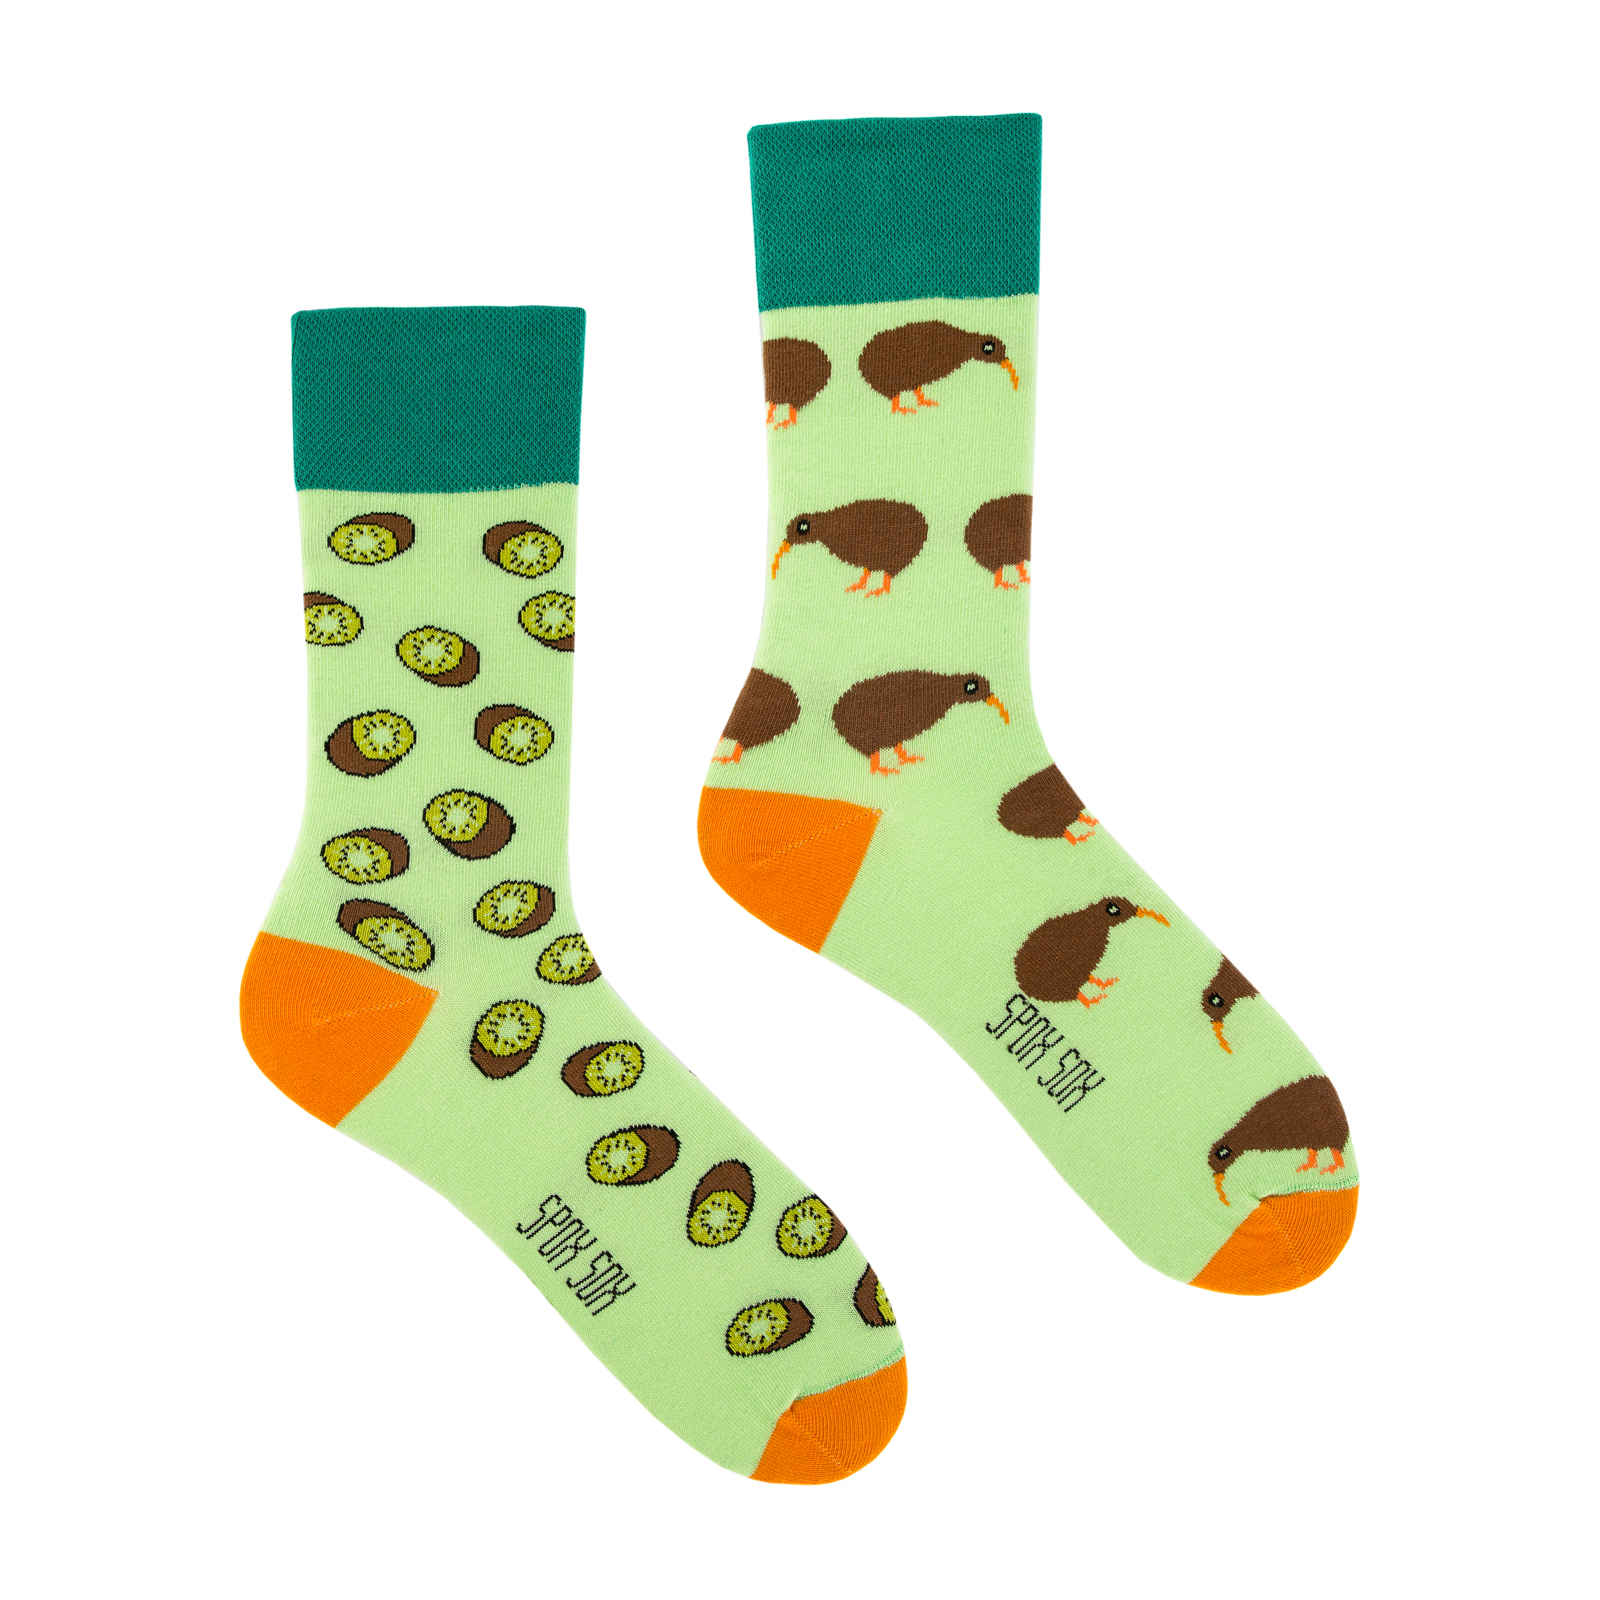 Kiwi socks | colorful socks | cool socks | mismatched socks | women and ...